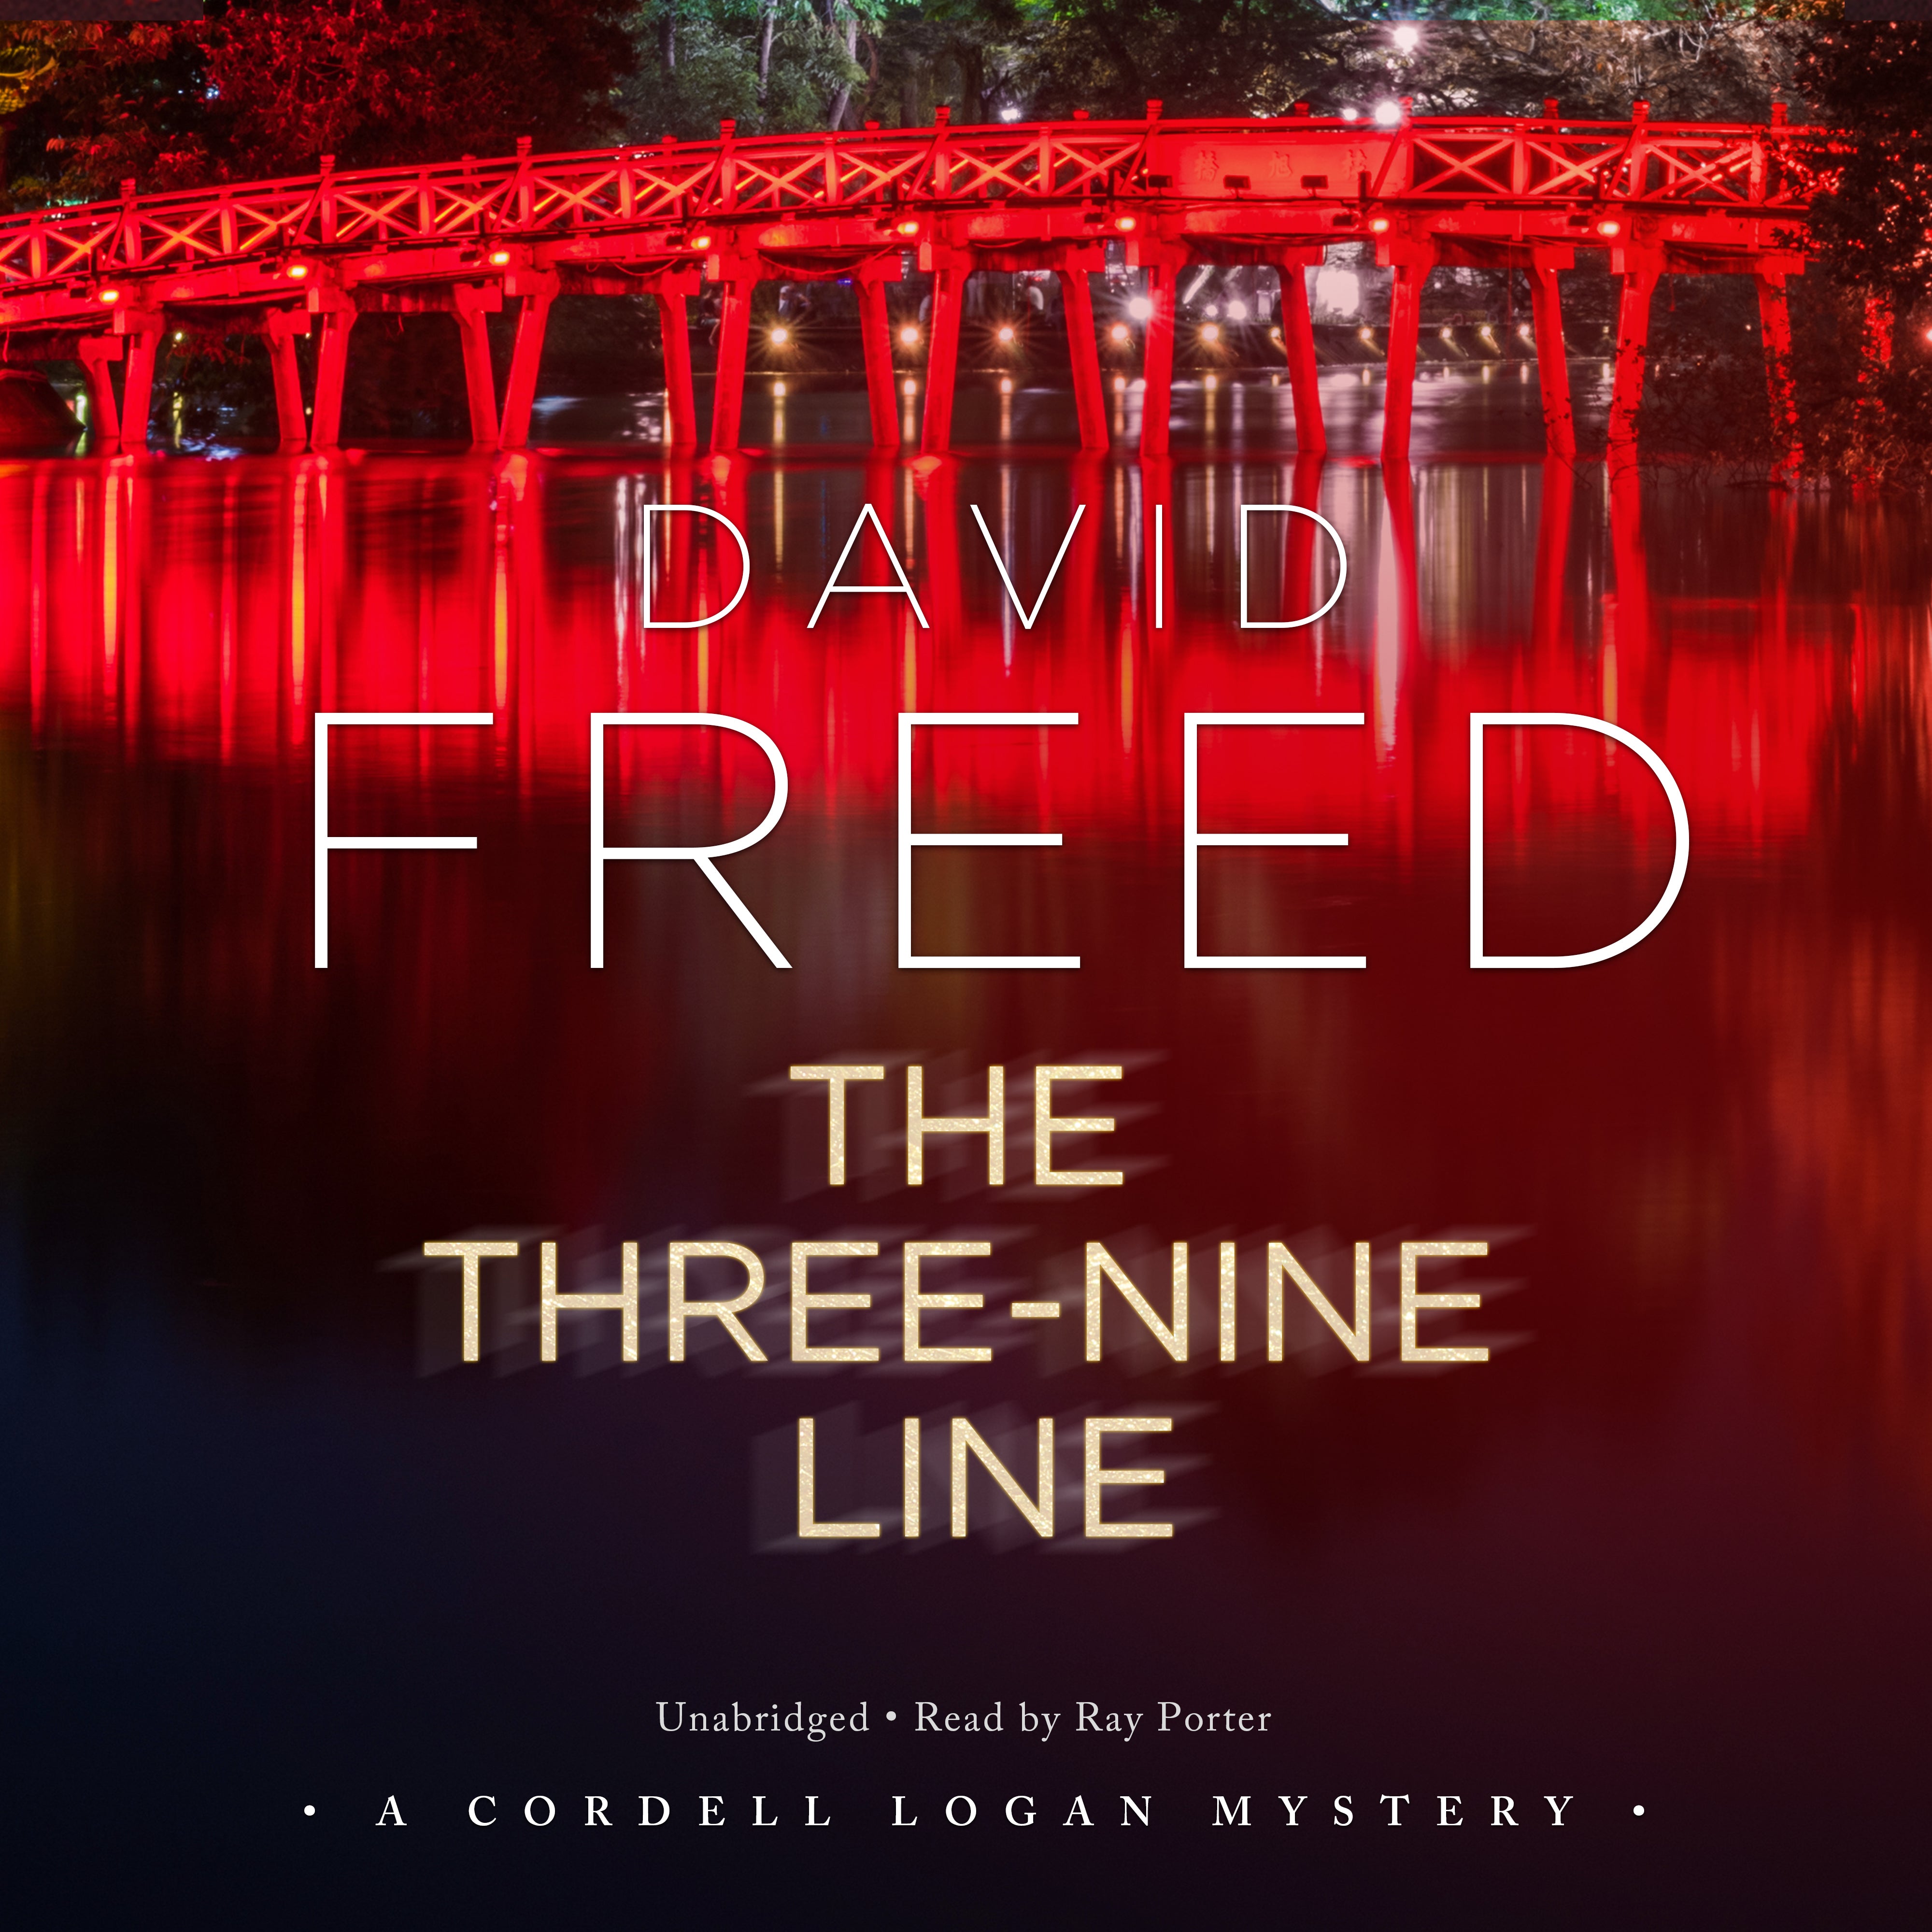 The Three-Nine Line